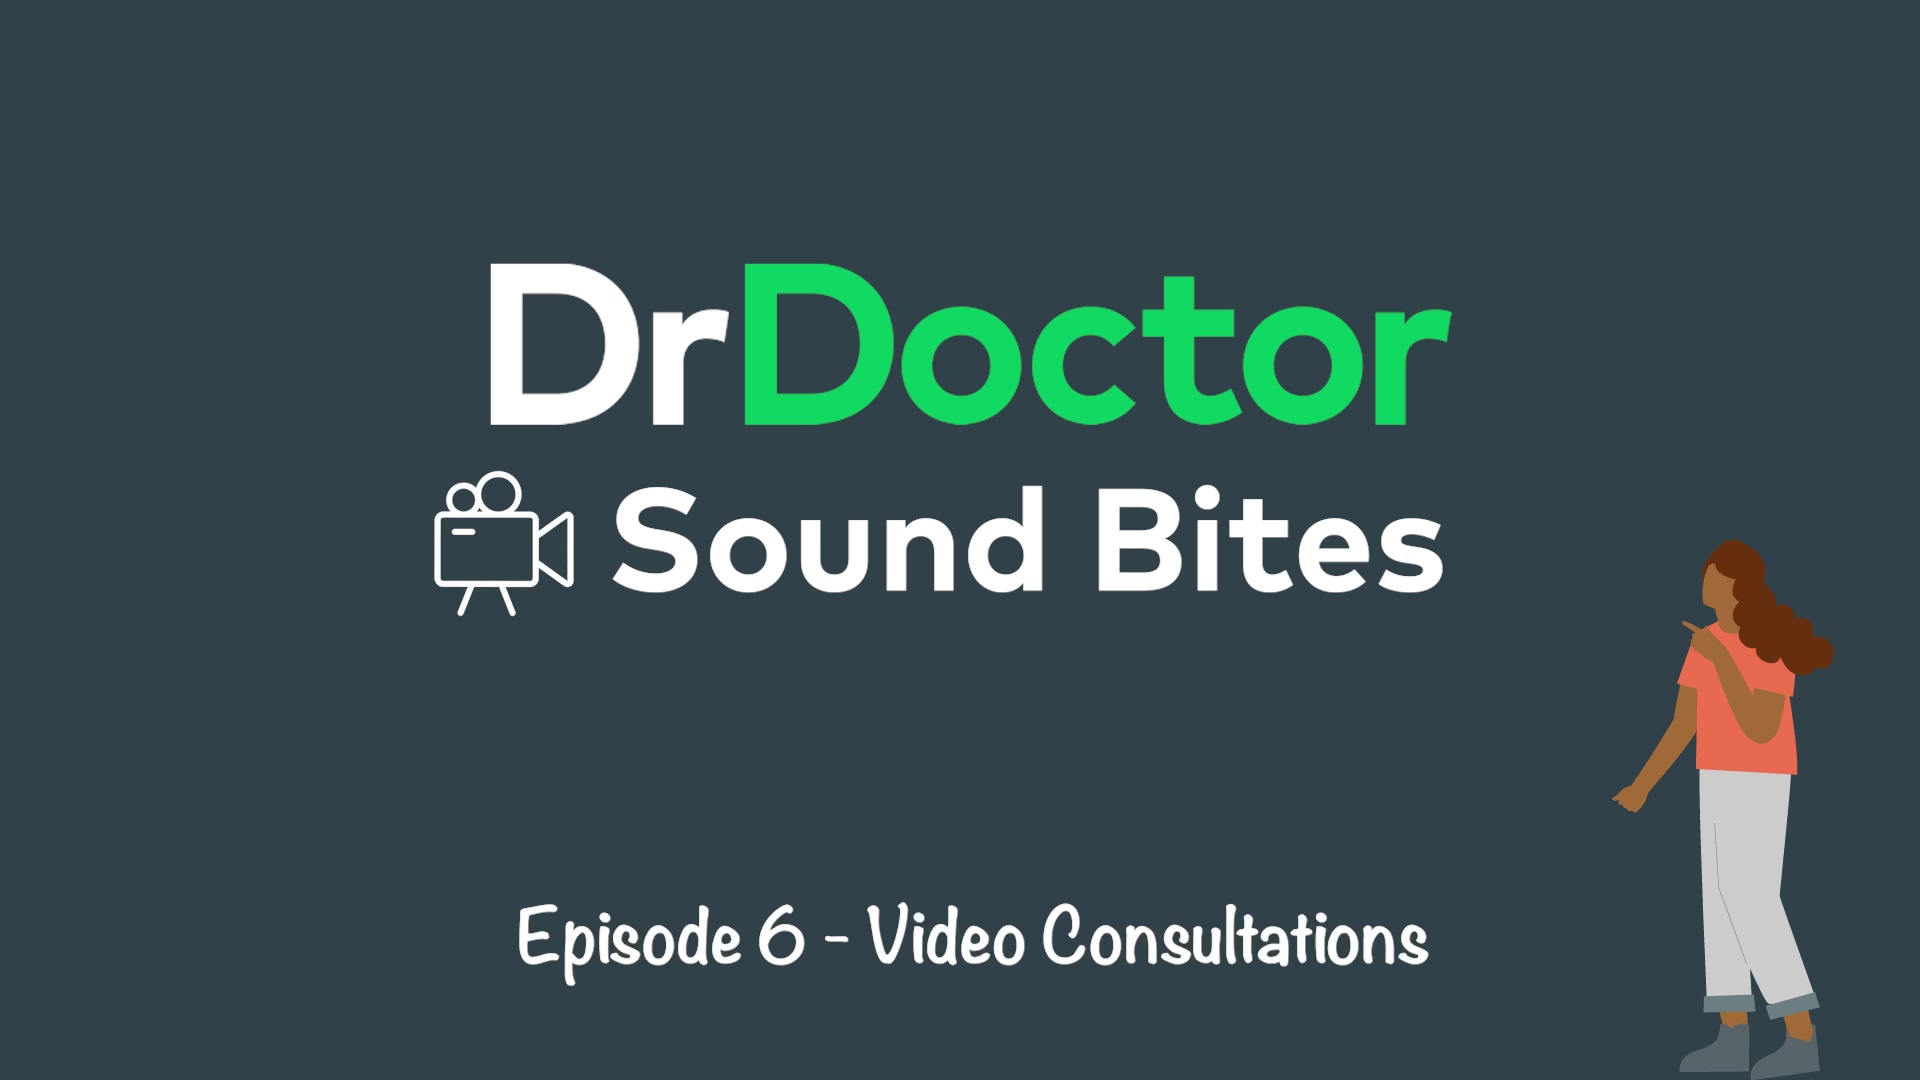 SOUND BITES EPISODE 6 - VIDEO CONSULTATIONS